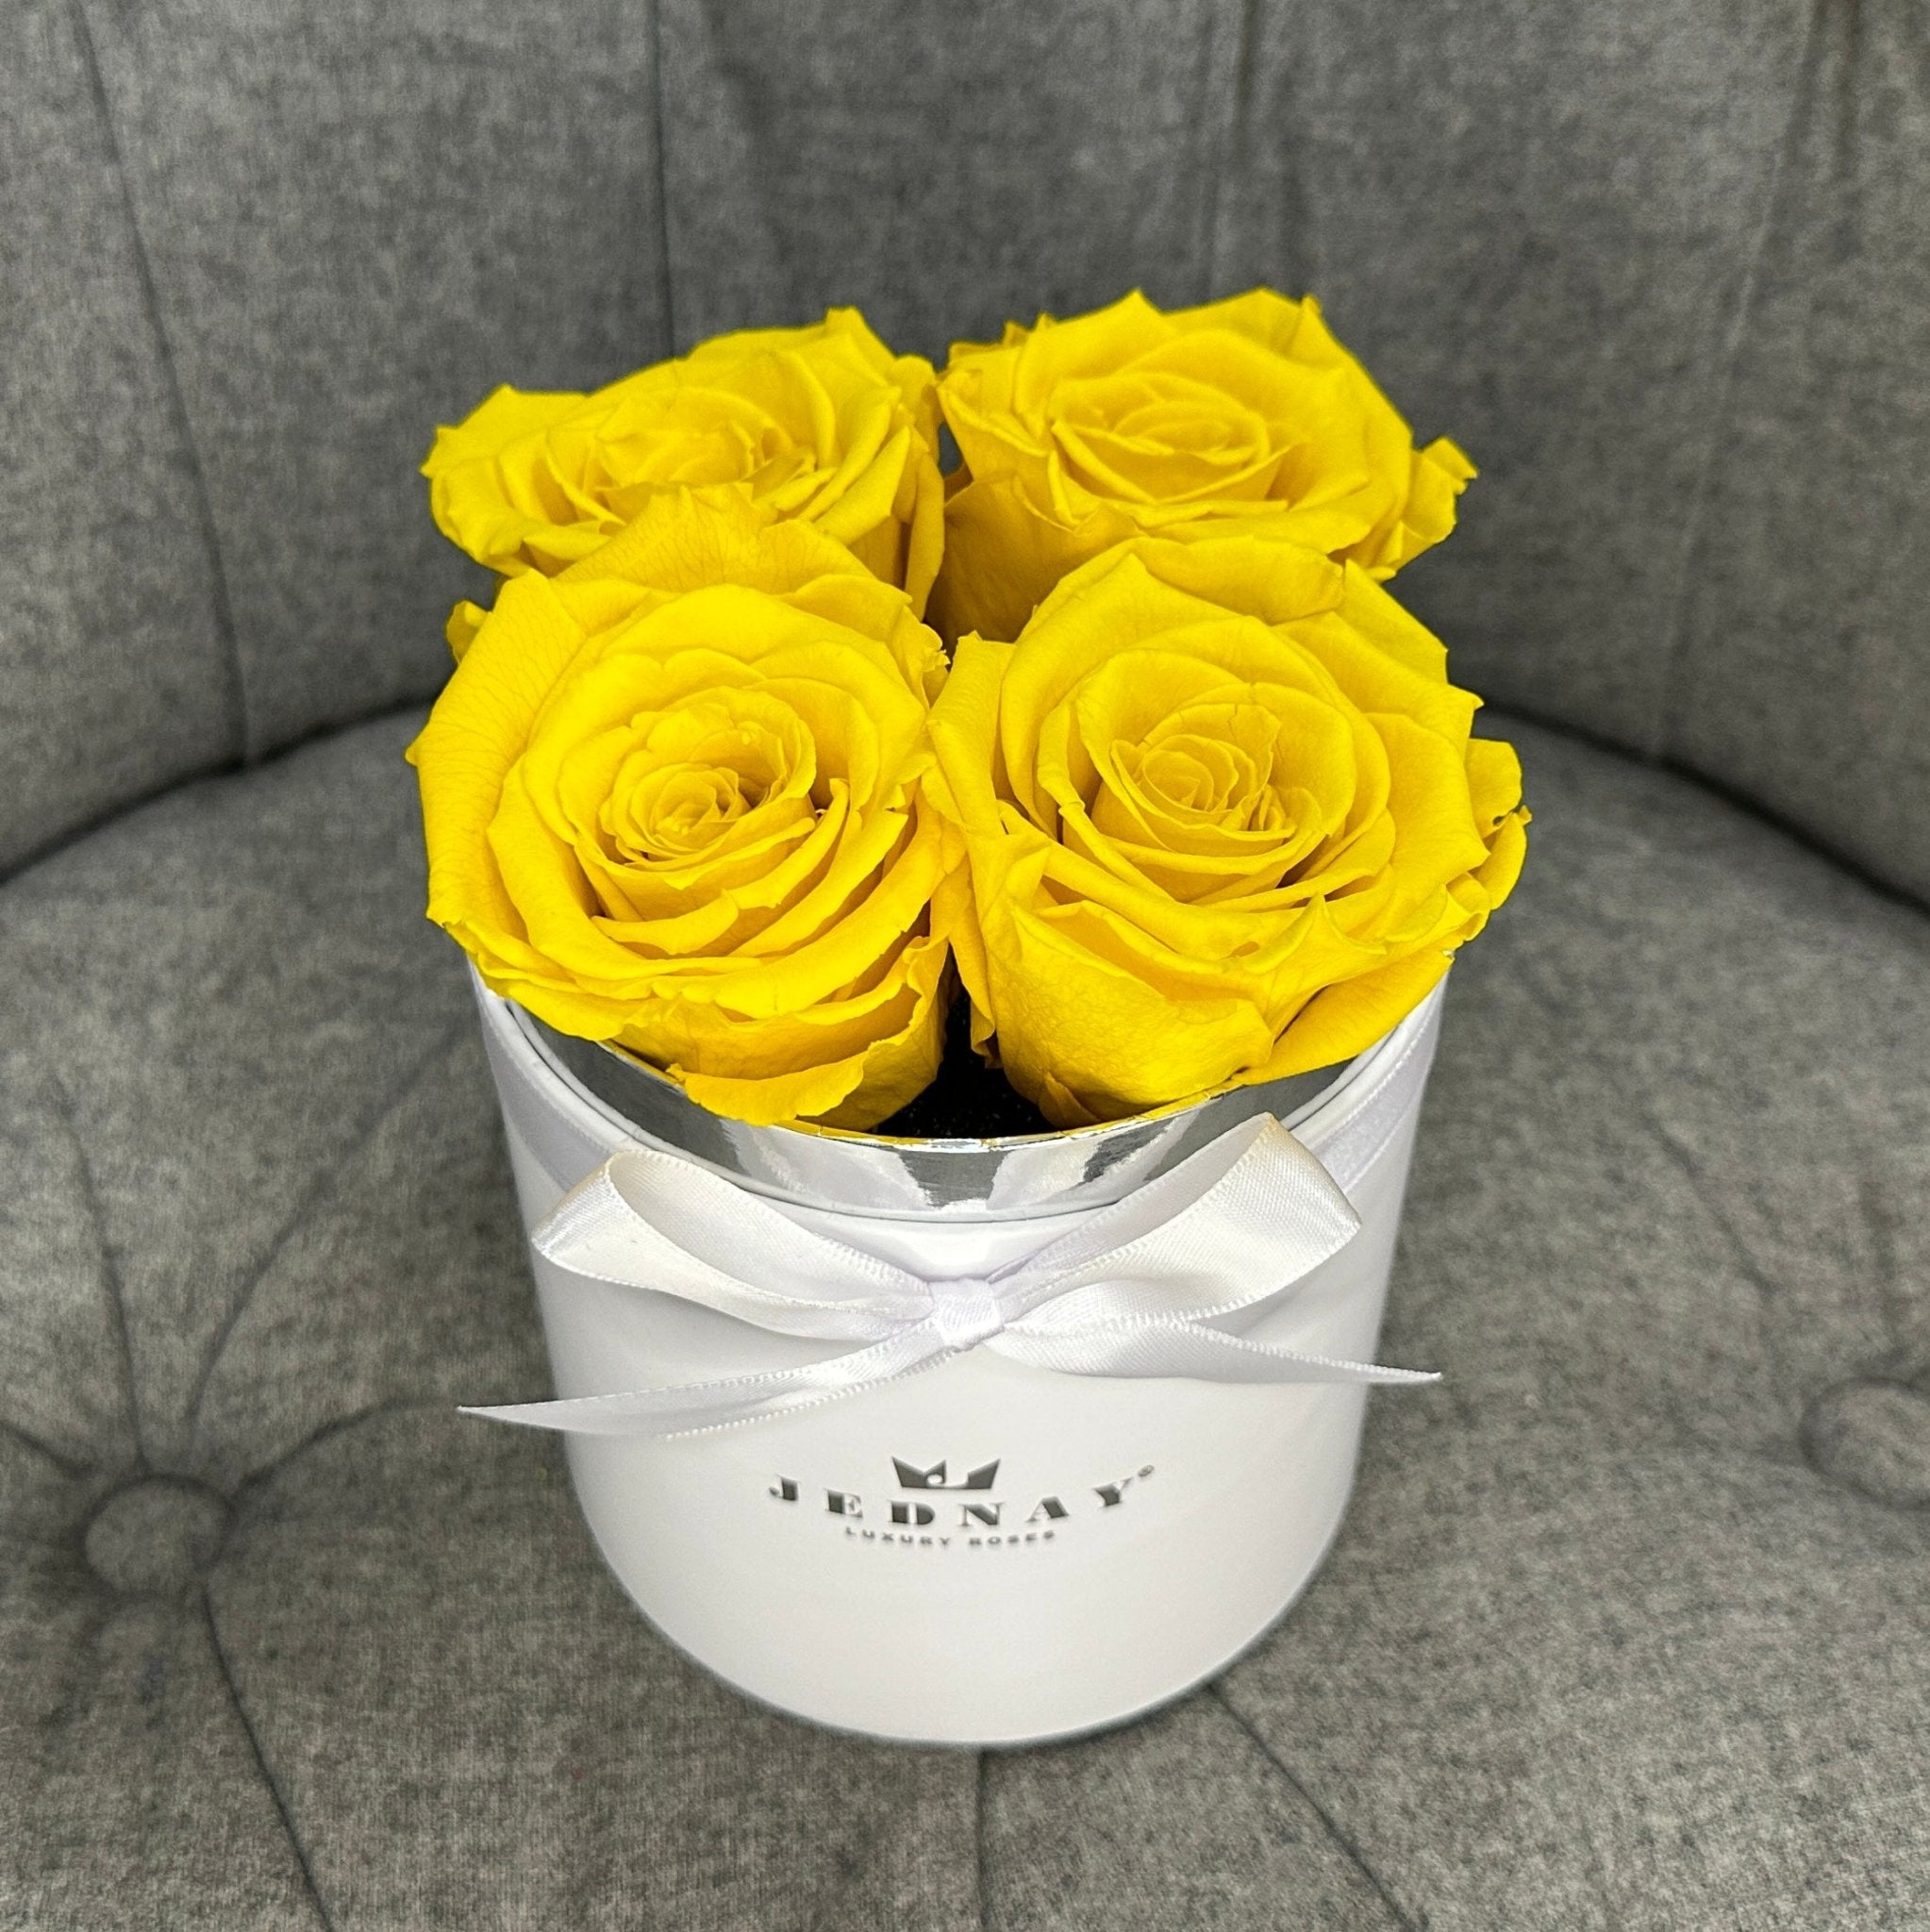 Petite Classic White Forever Rose Box - Sunshine Yellow Eternal Roses - Jednay Roses